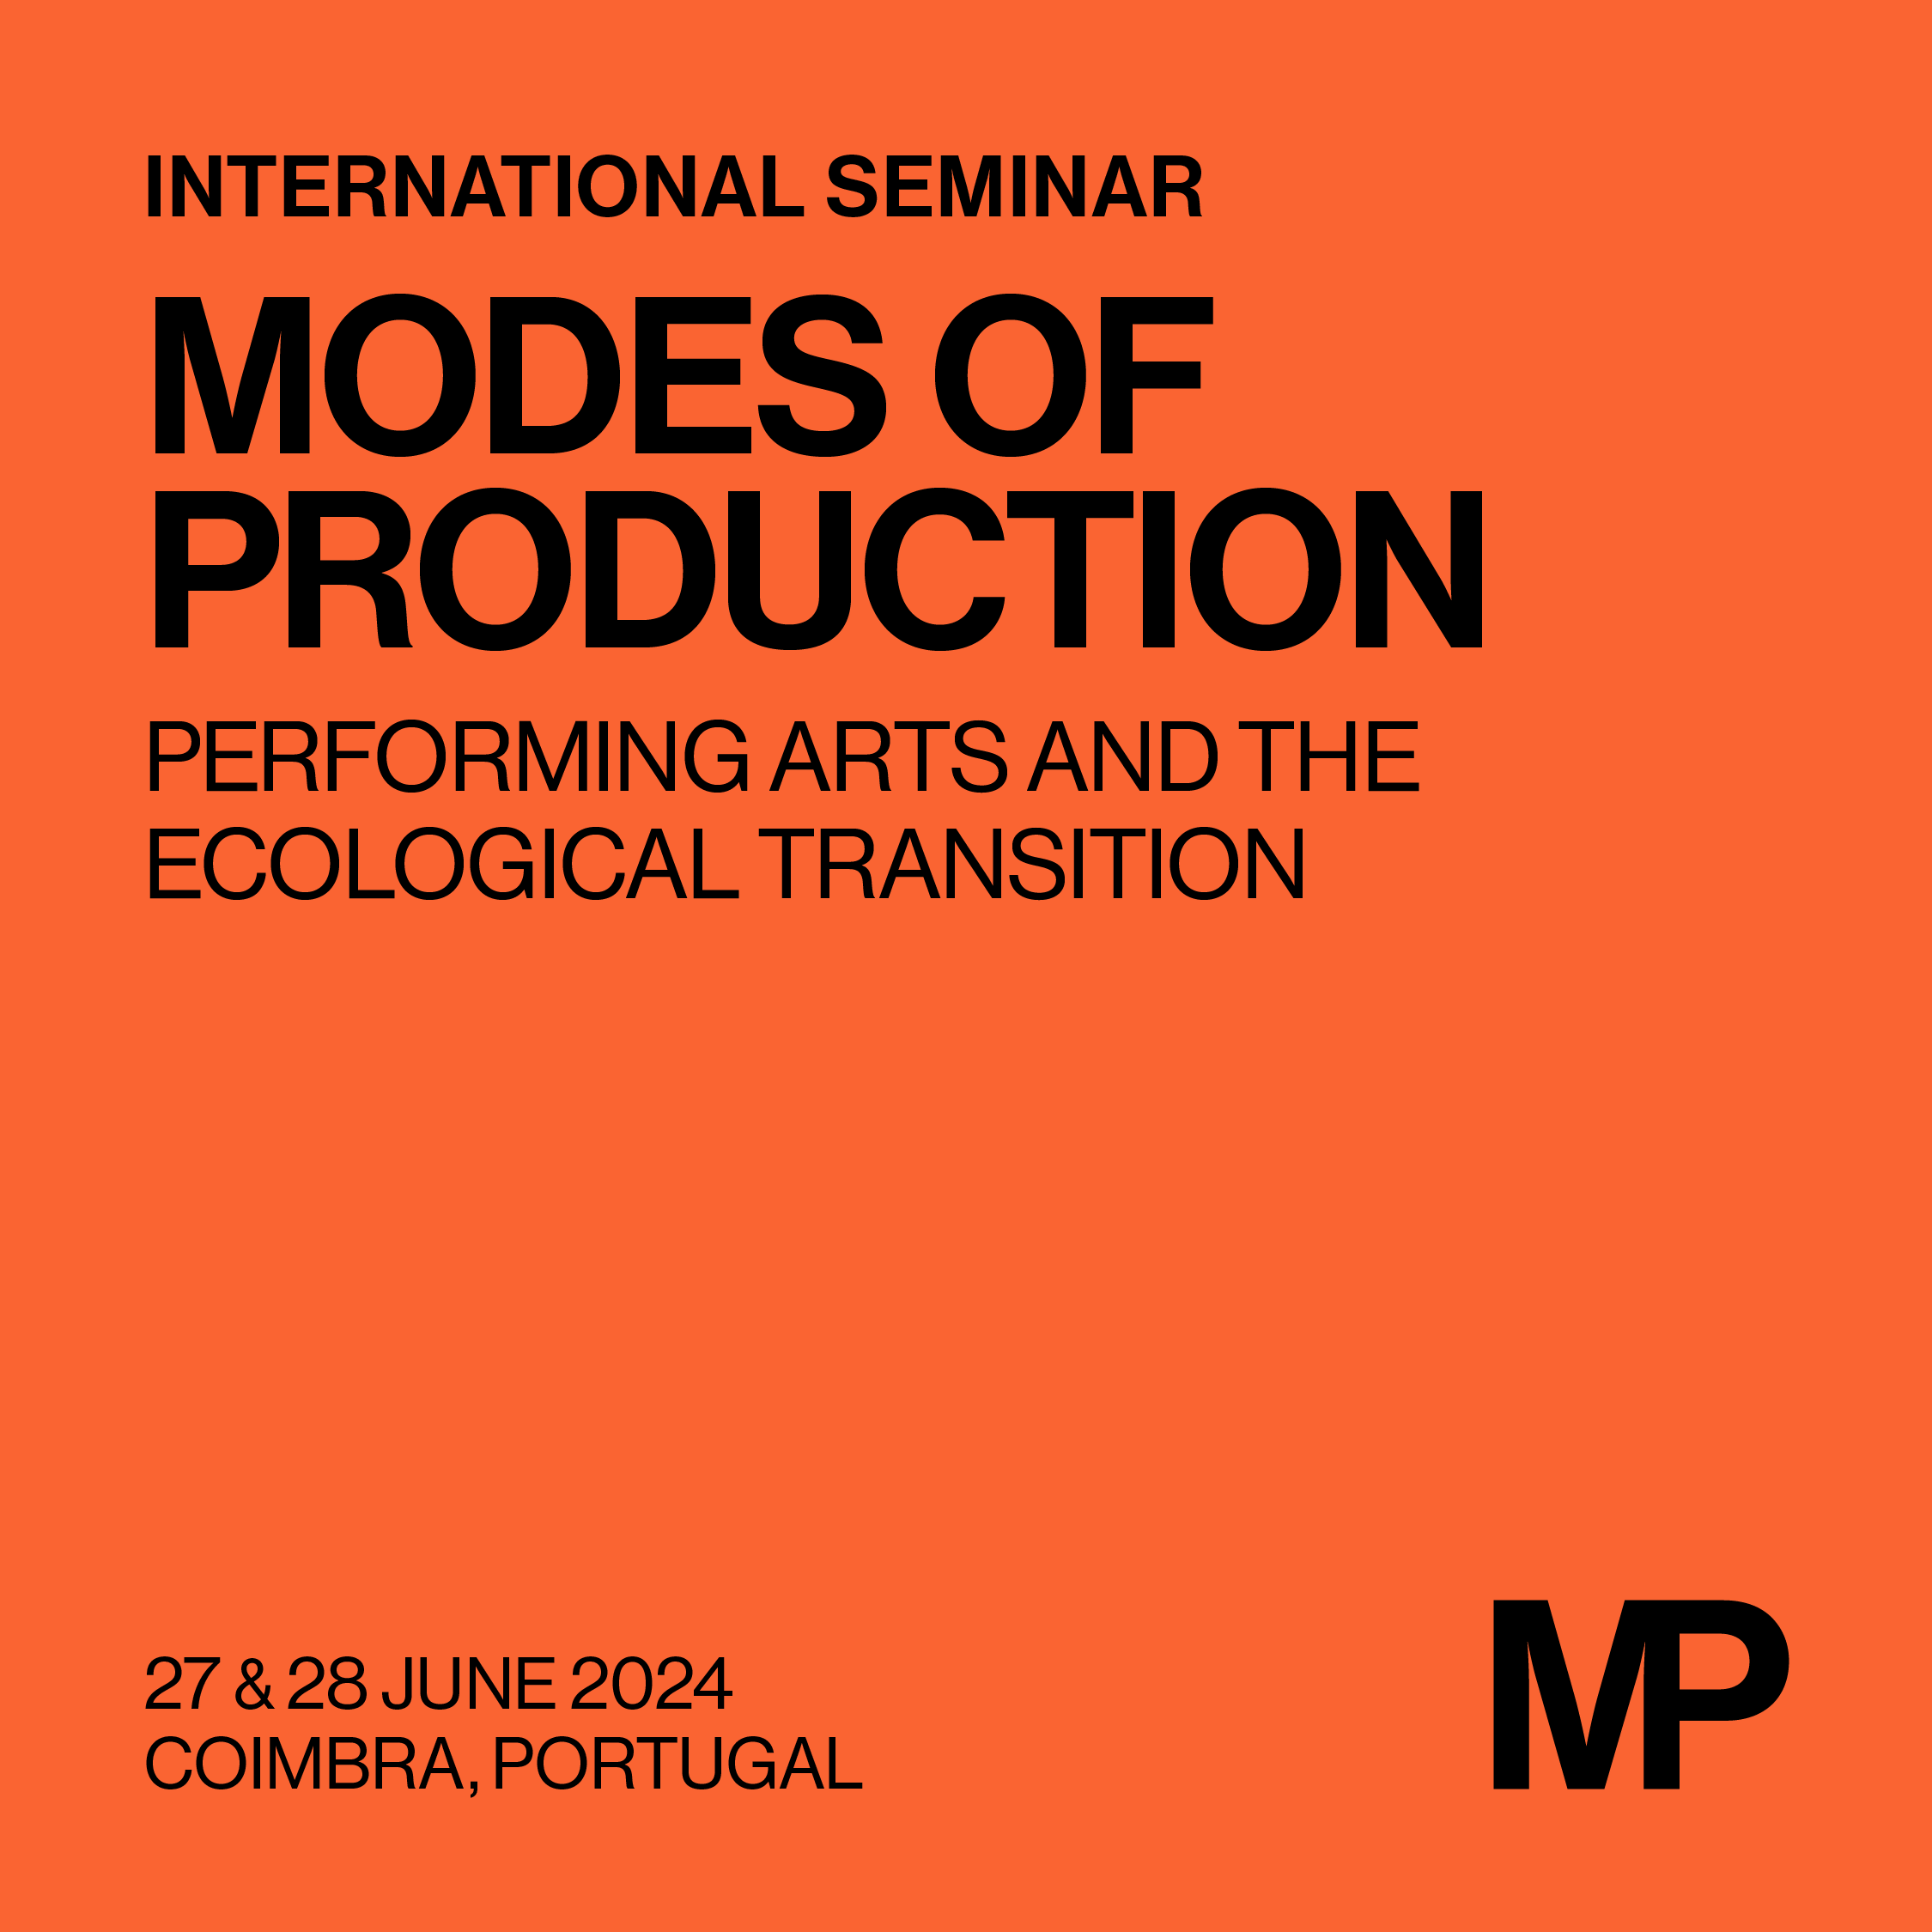 Internacional Seminar Modes of Production - Conference